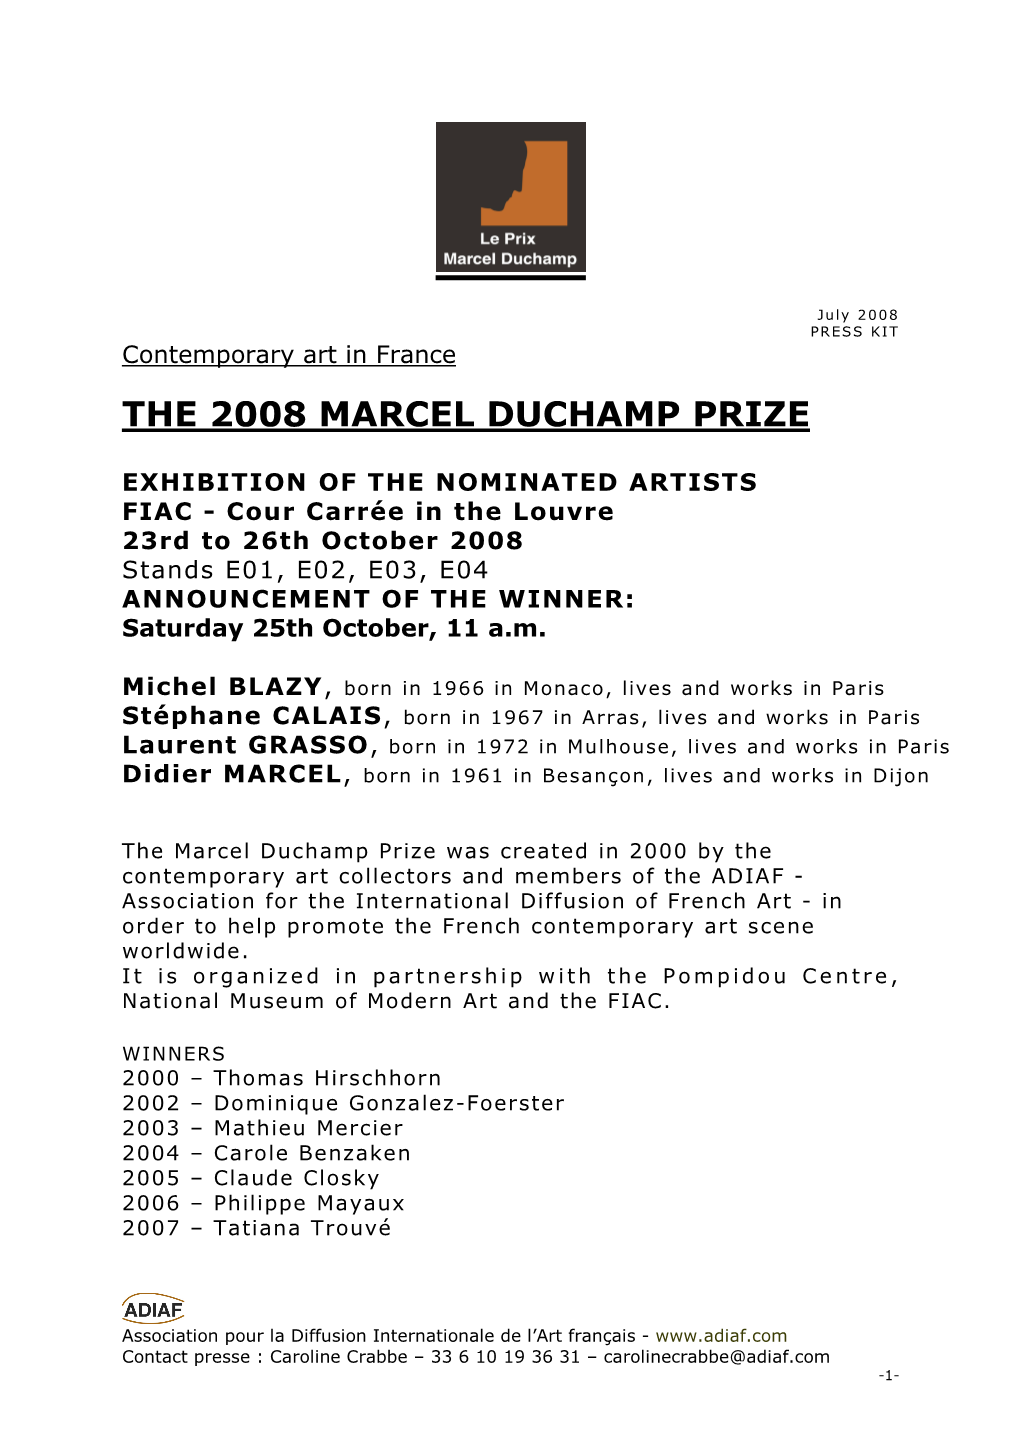 The 2008 Marcel Duchamp Prize